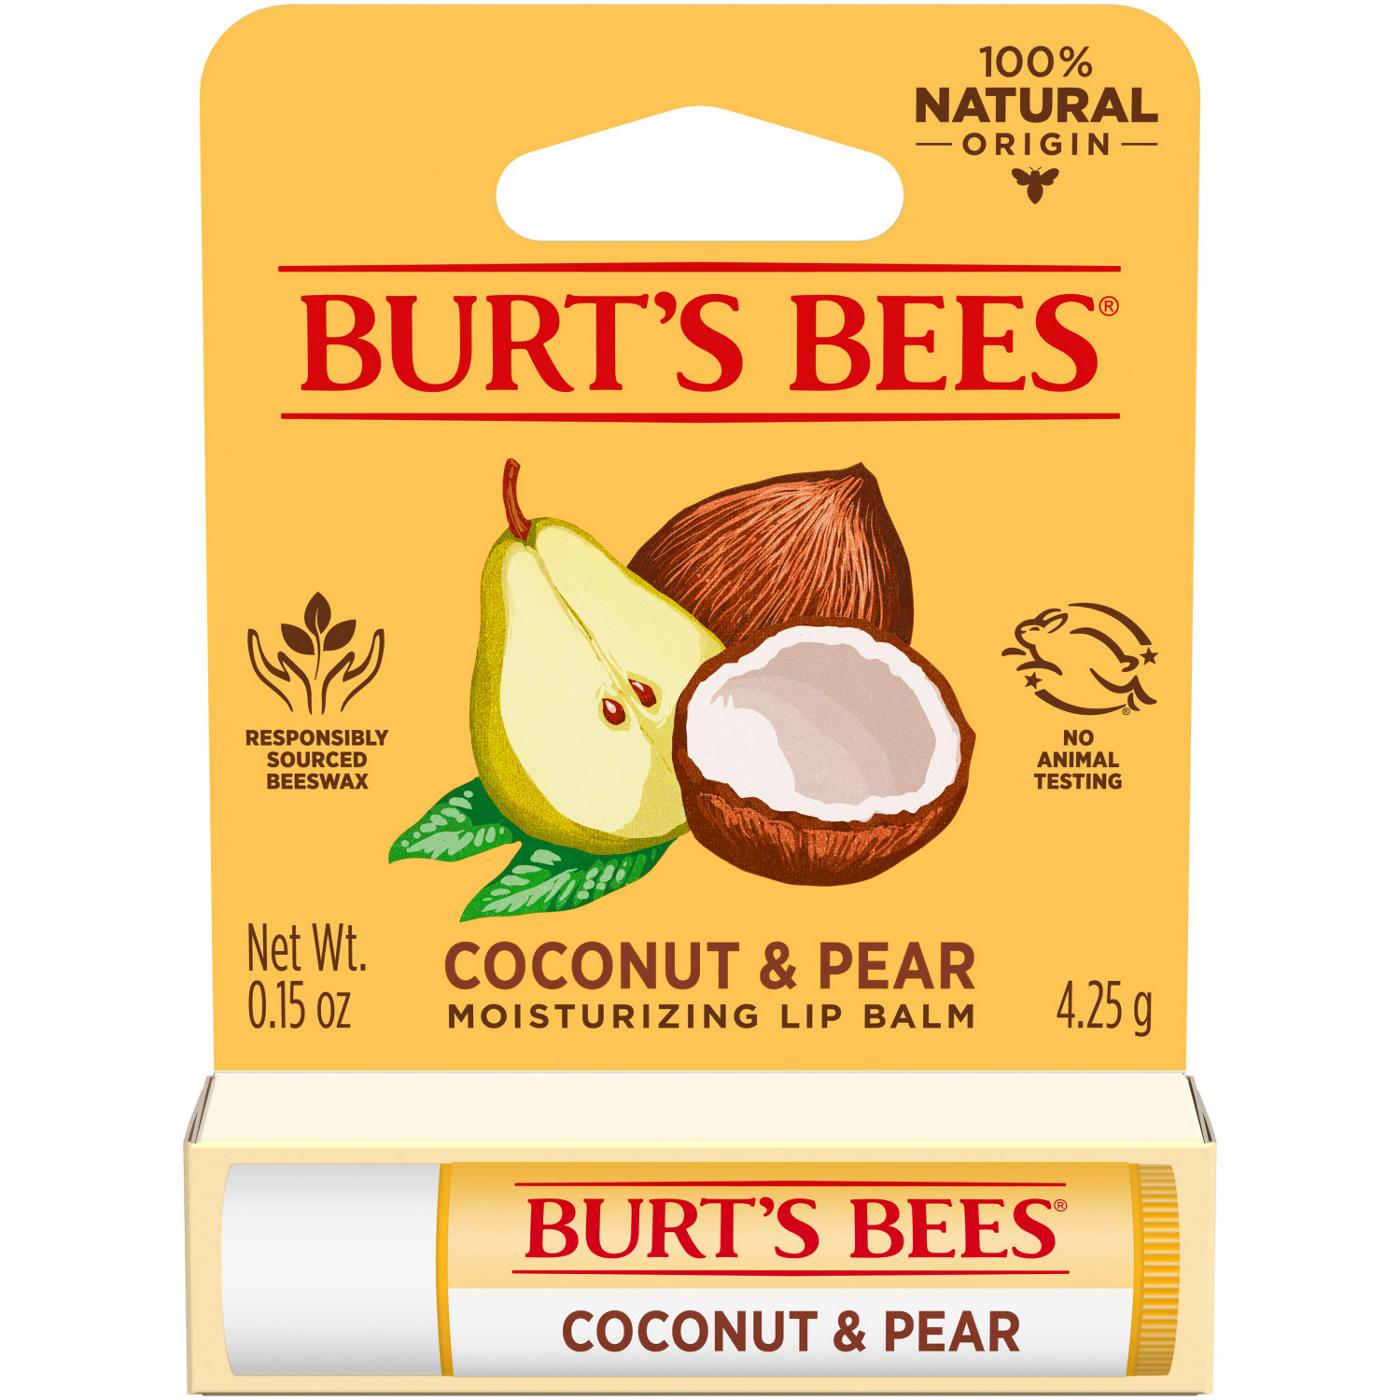 Burt's Bees Coconut Pear Moisturizing Lip Balm; image 1 of 5